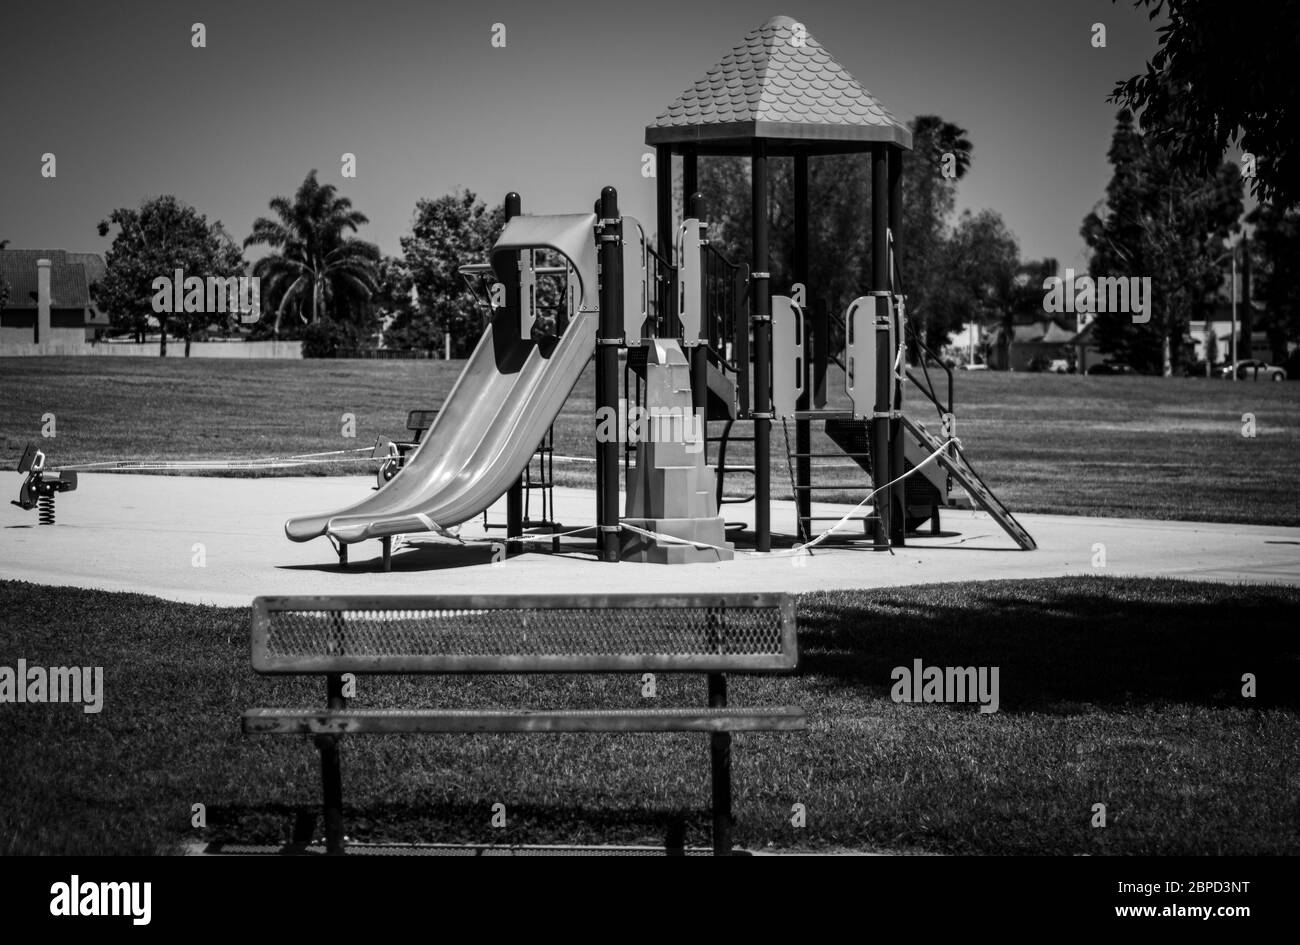 playground closed due to pandemic Stock Photo